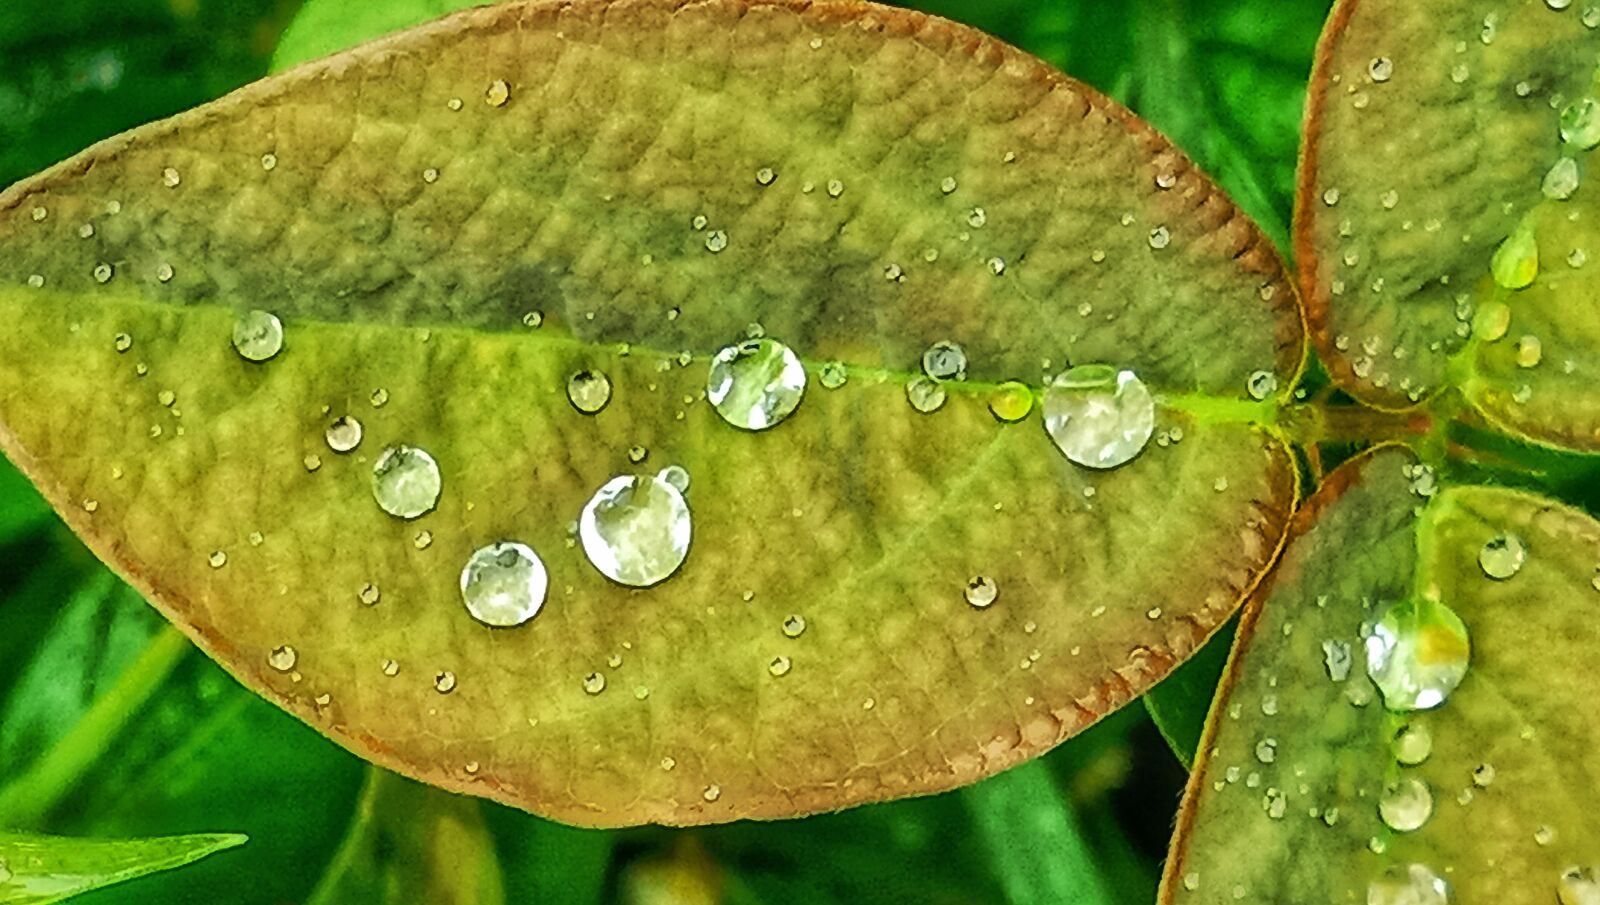 vivo 1802 sample photo. Droplets, leaves, nature photography